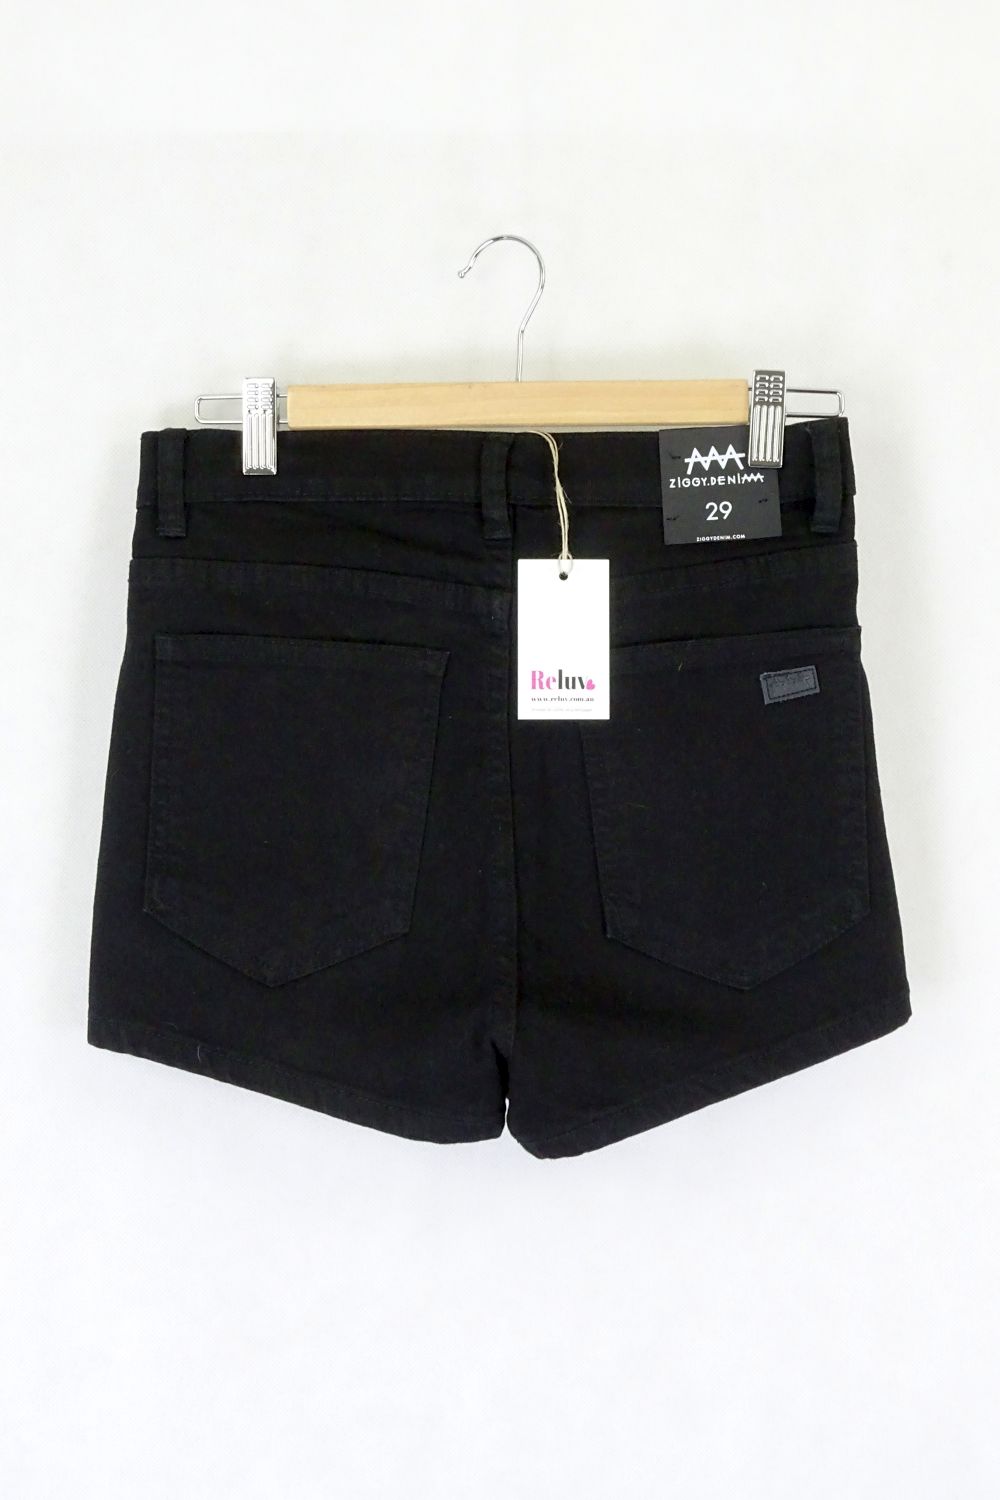 Ziggy Denim Black Shorts 30 (AU12)